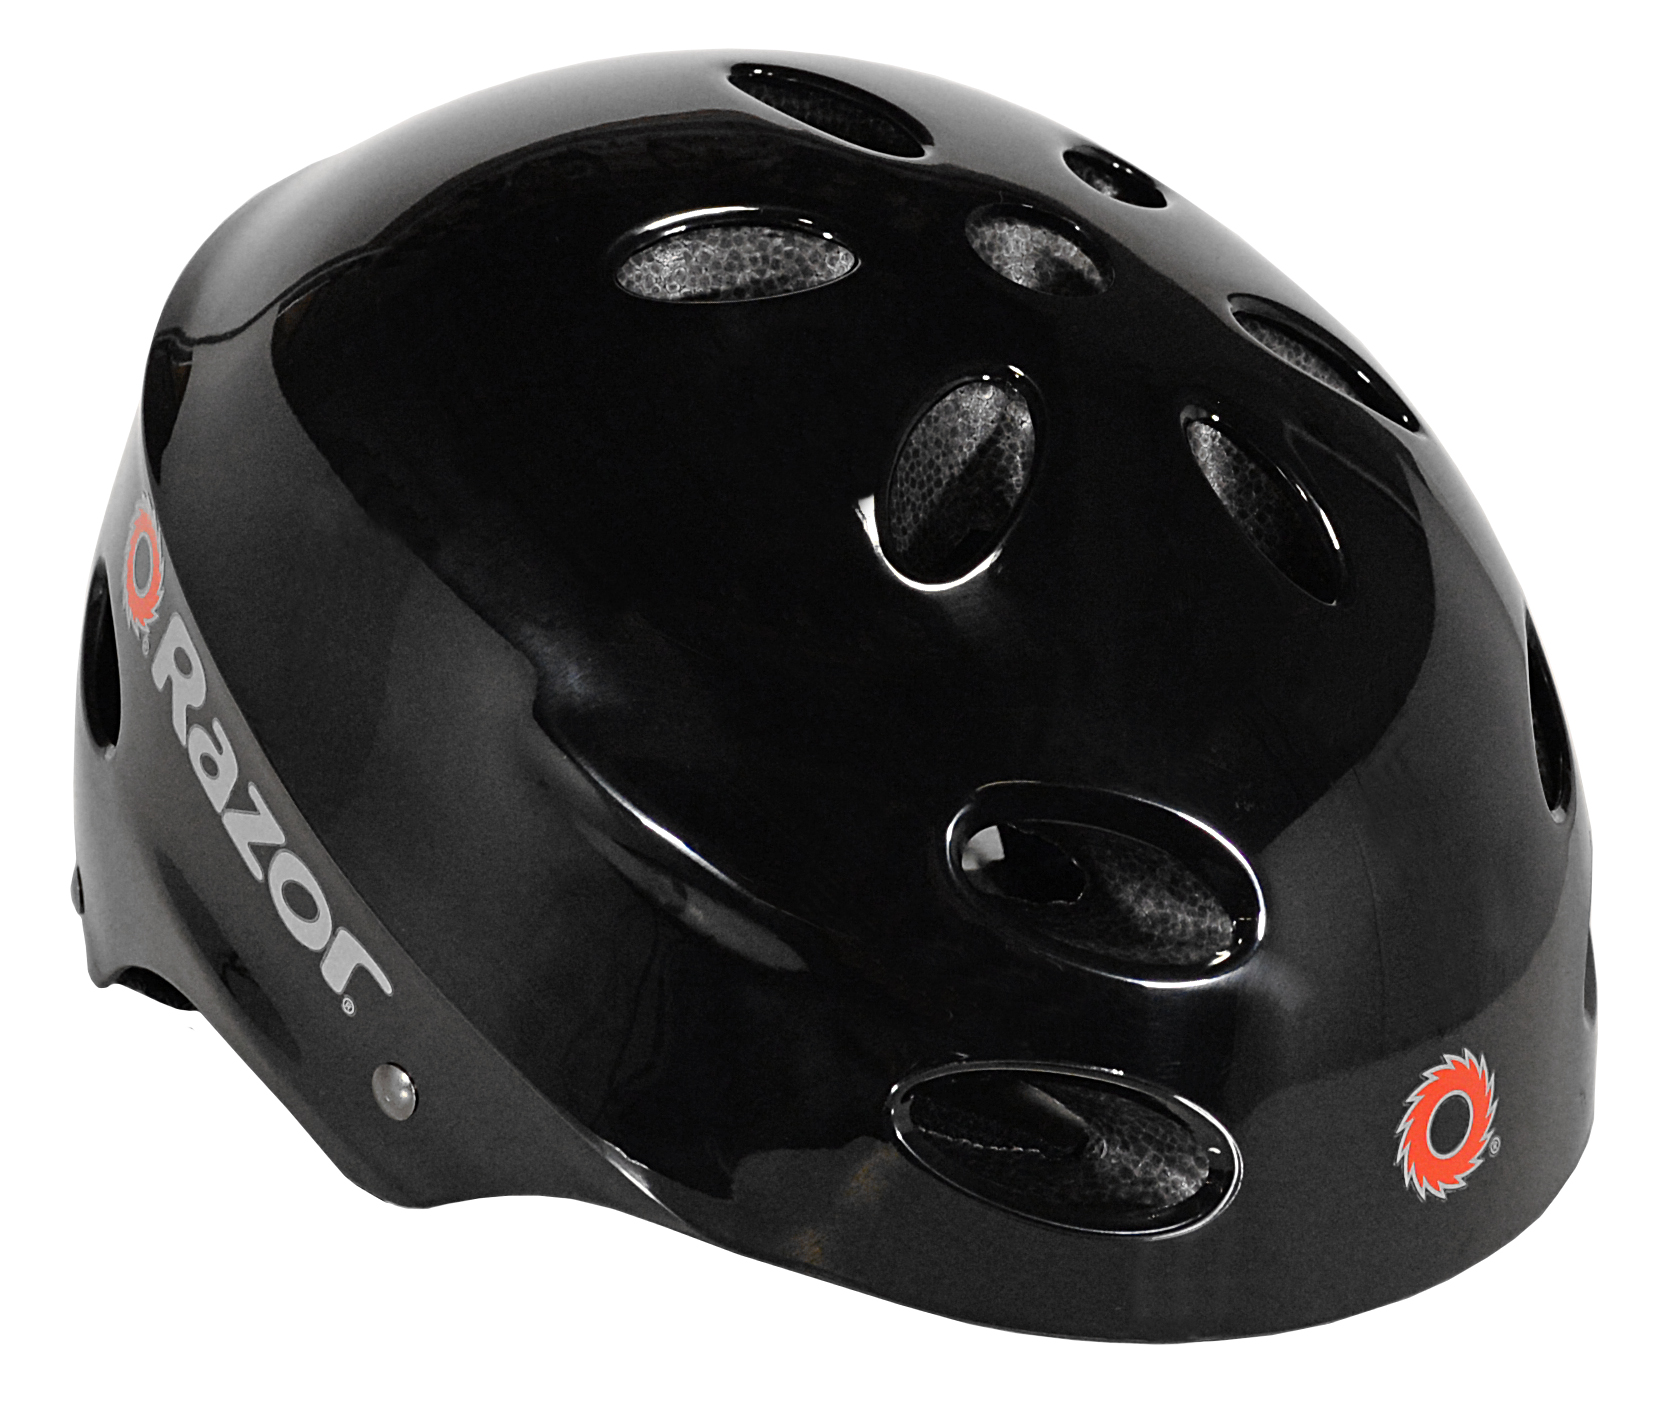 Razor V17 Multi-Sport Child's Helmet, Glossy Black - image 2 of 4